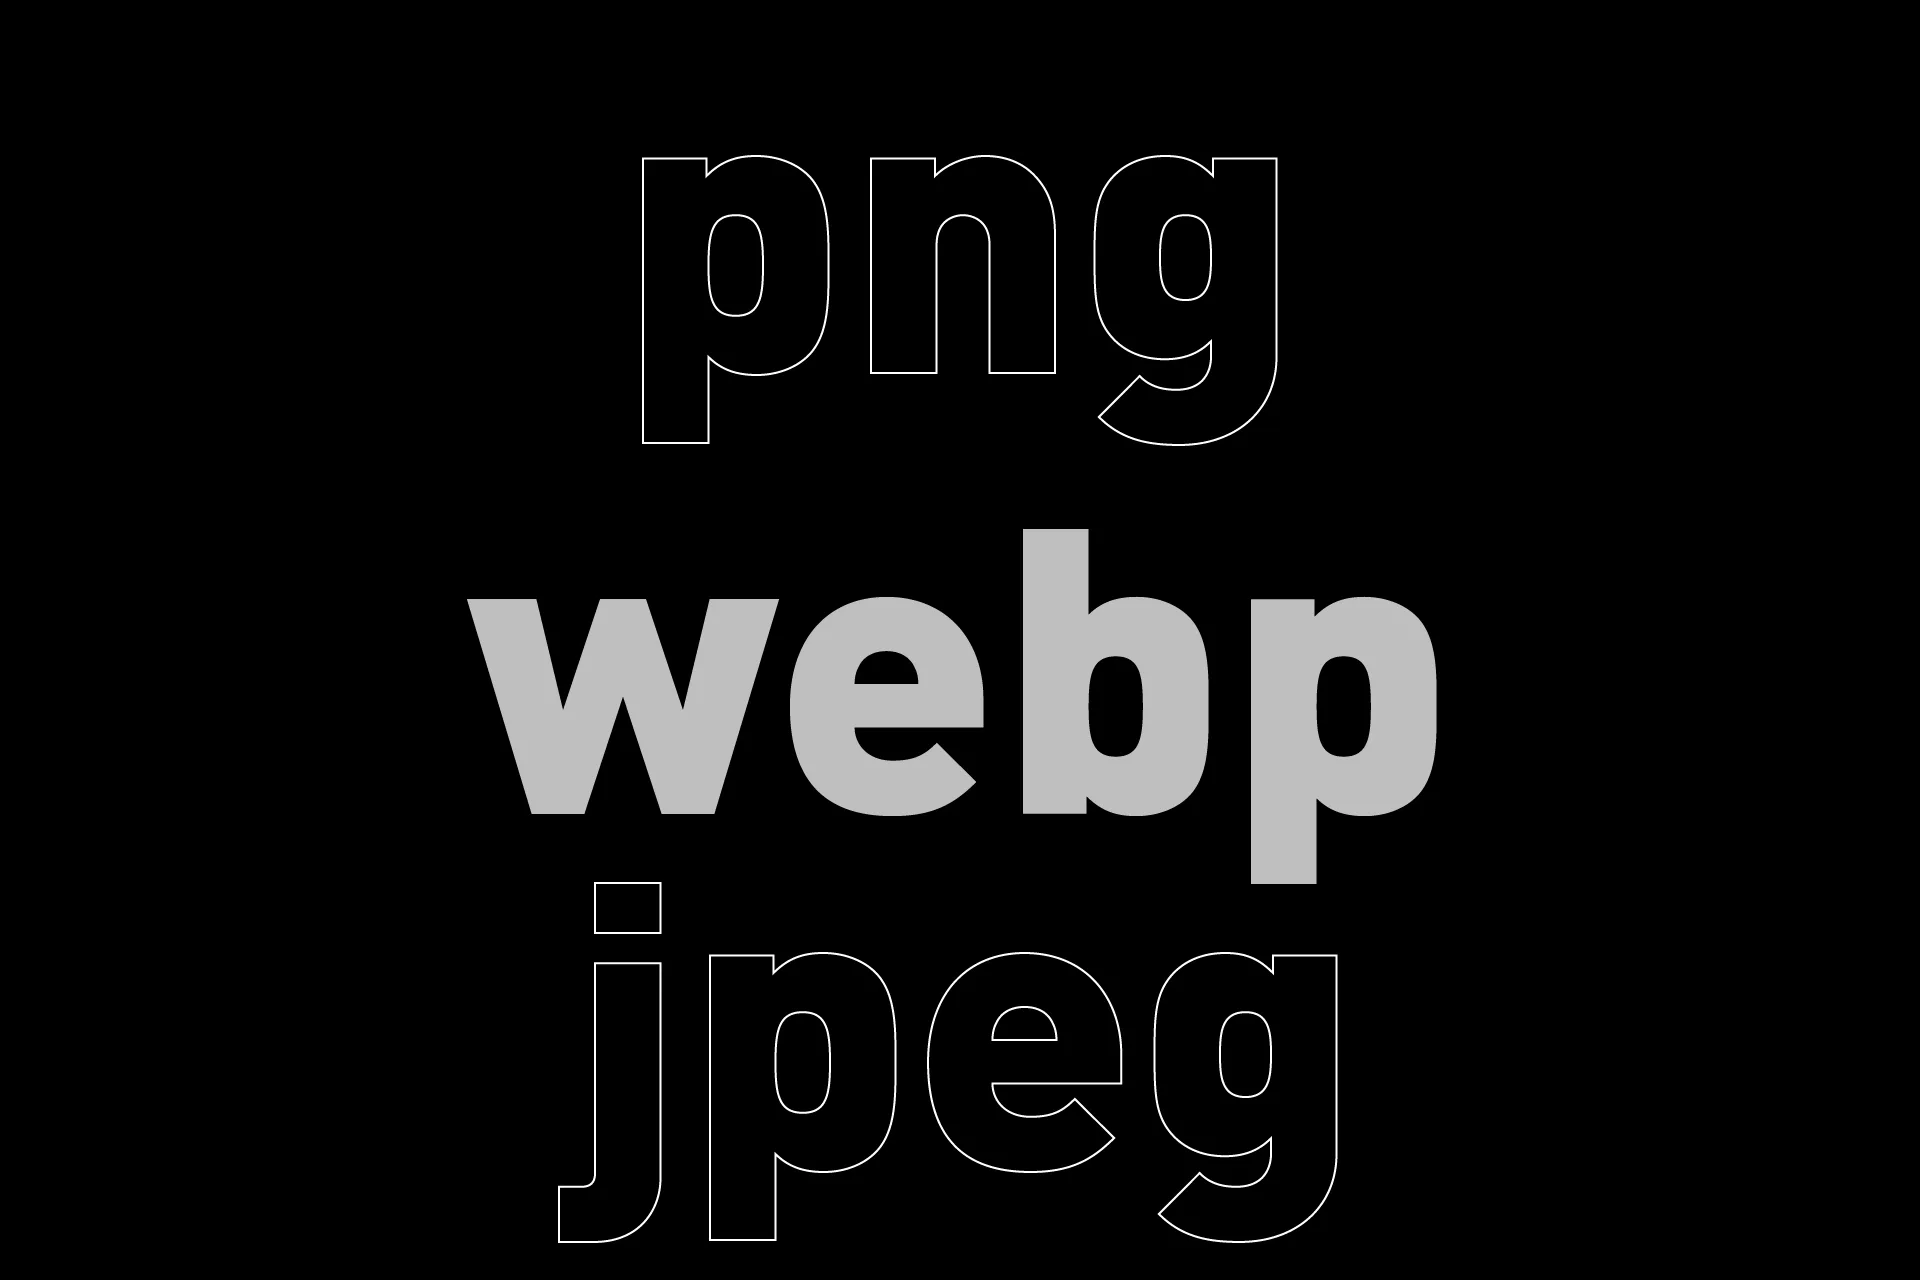 How To Convert JPEG / JPG / PNG to WebP in Terminal